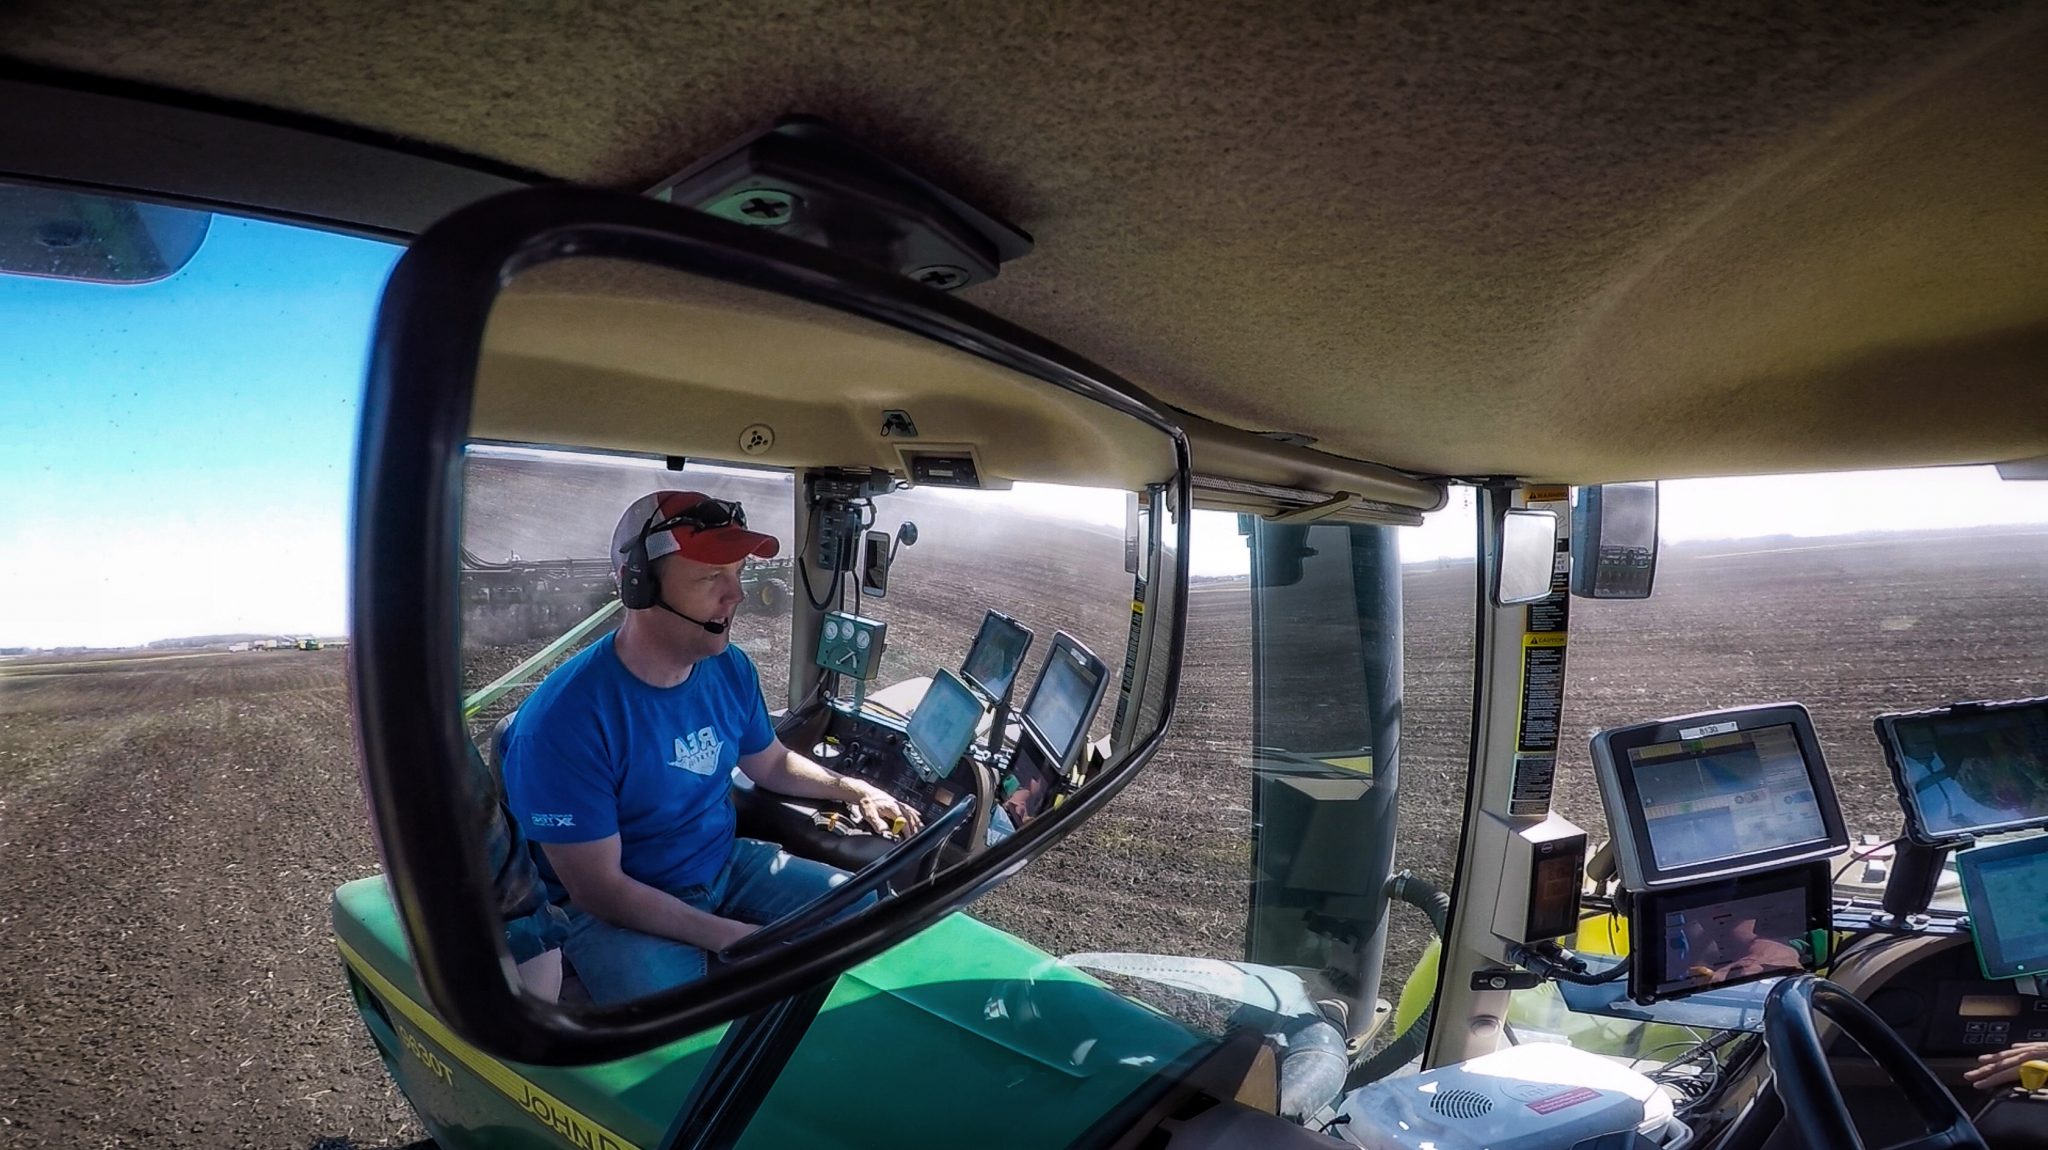 Chris Nelson driving equipment during planting season